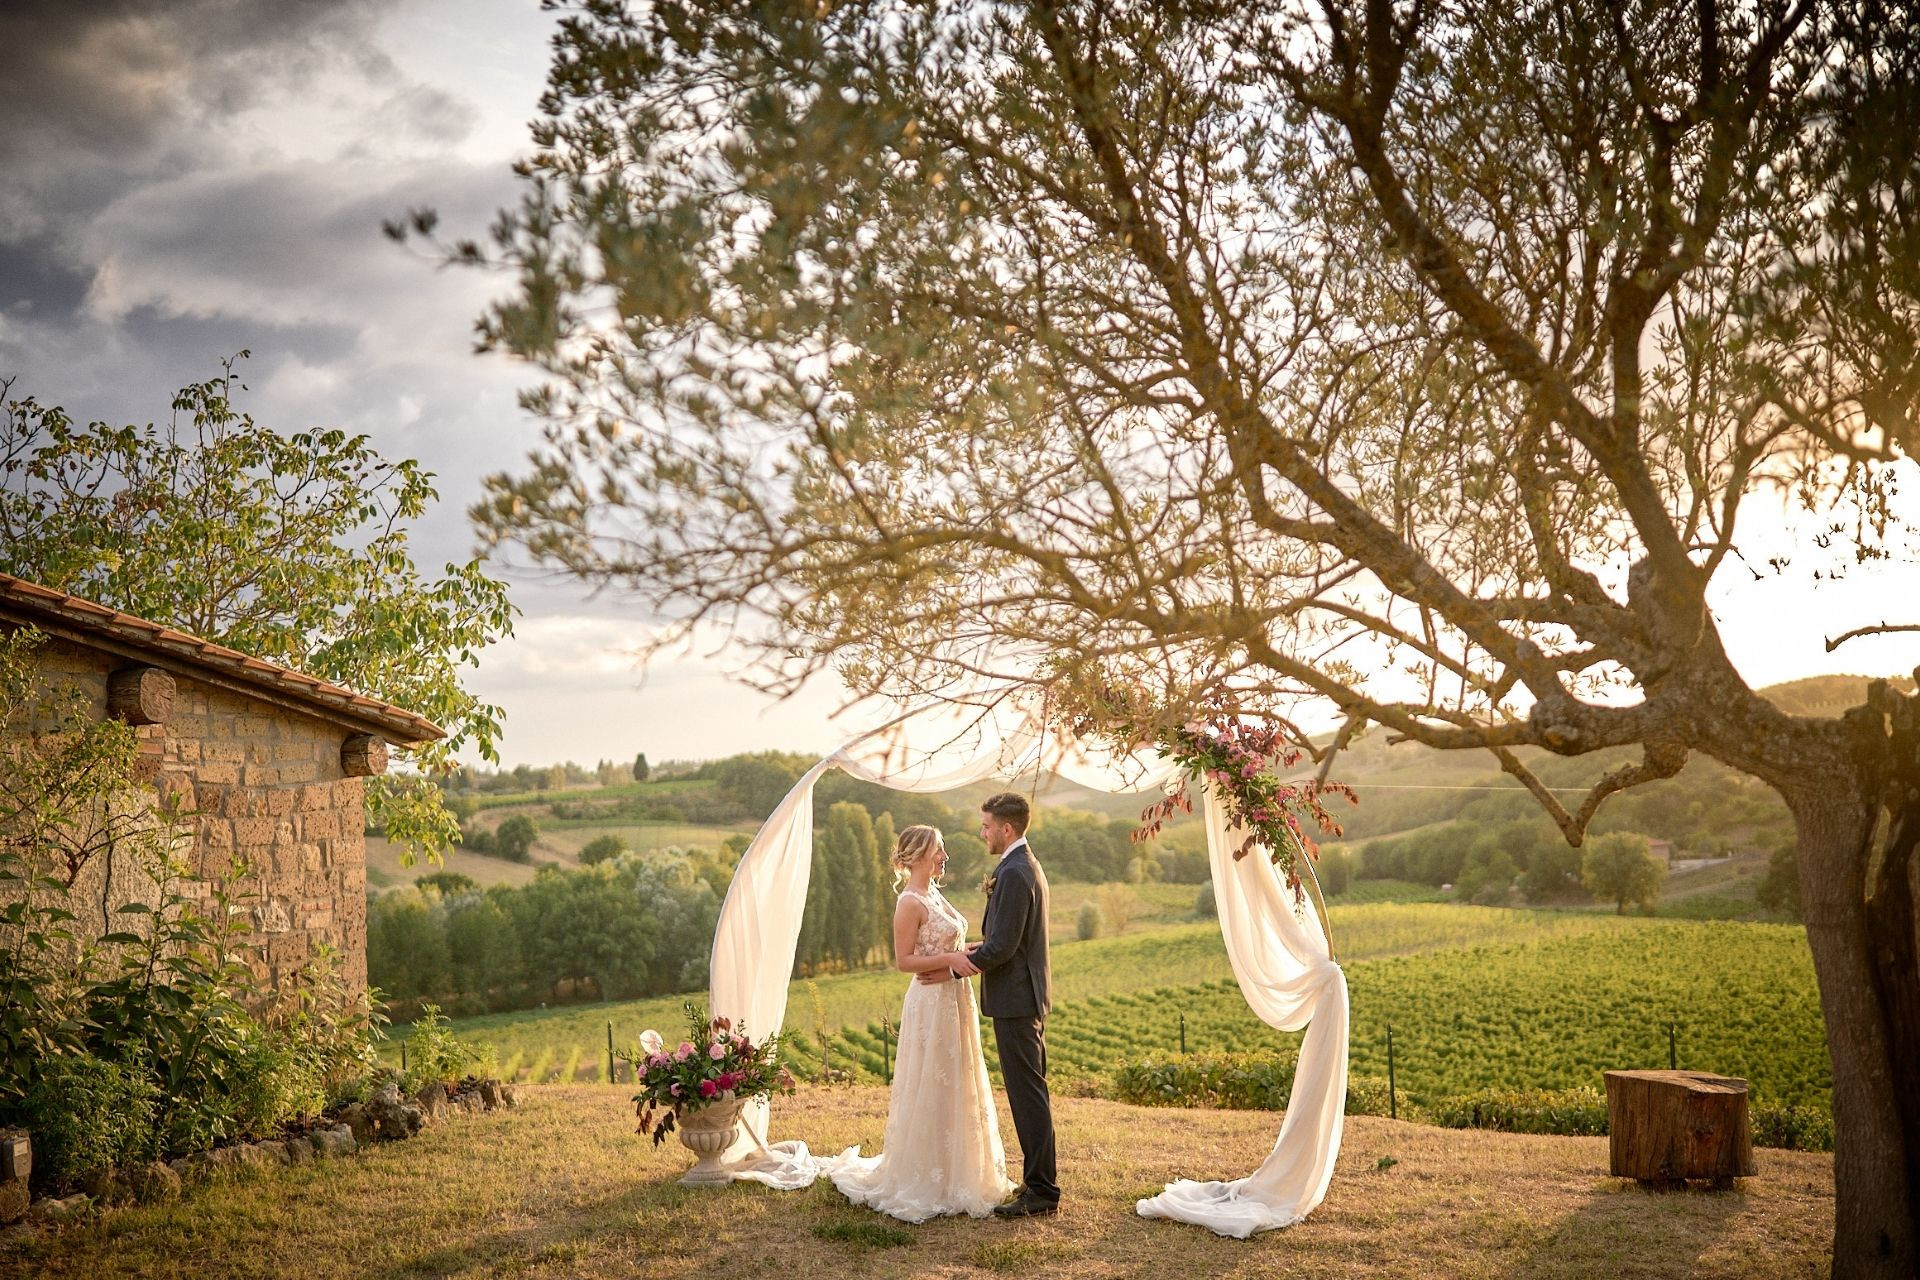 Valdichiana Senese: the perfect wedding destination to say "I do"